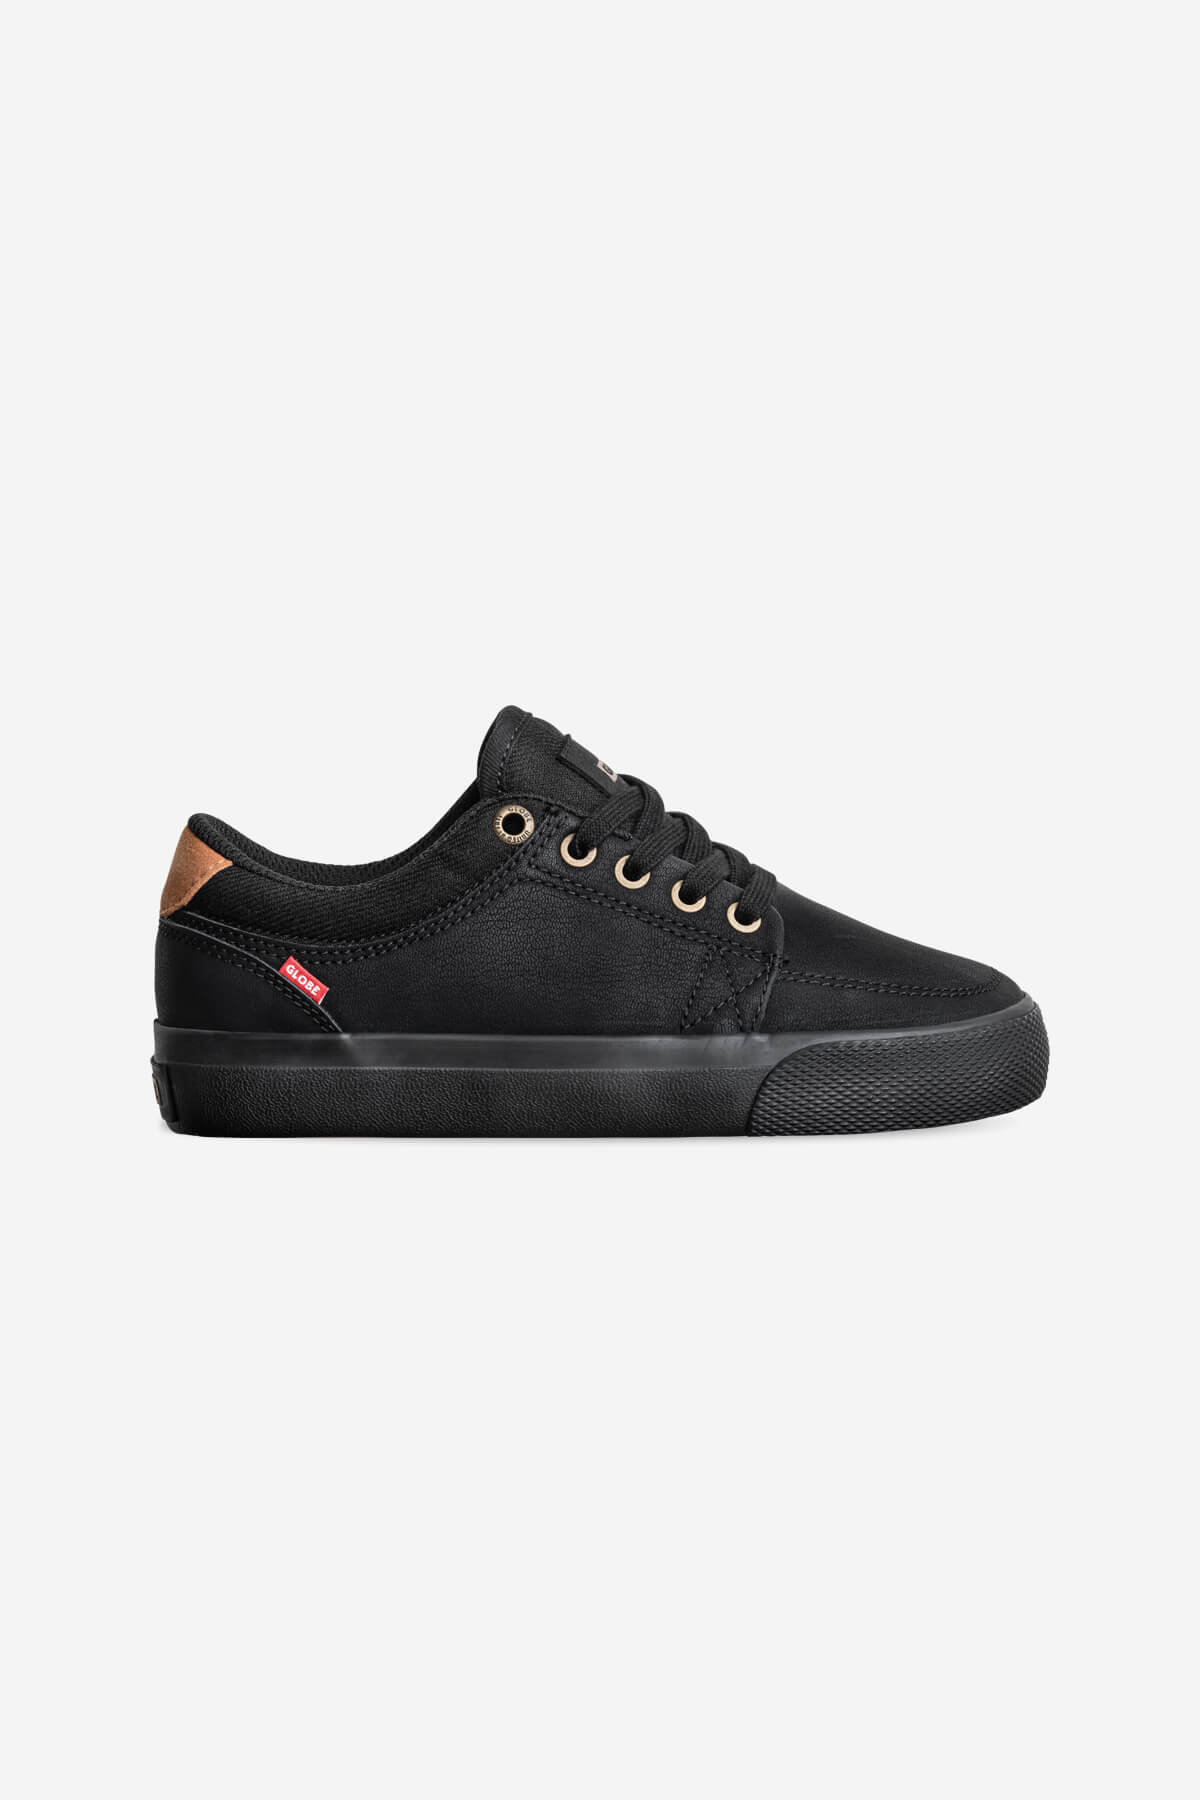 gs-kids black mock black skateboard shoes